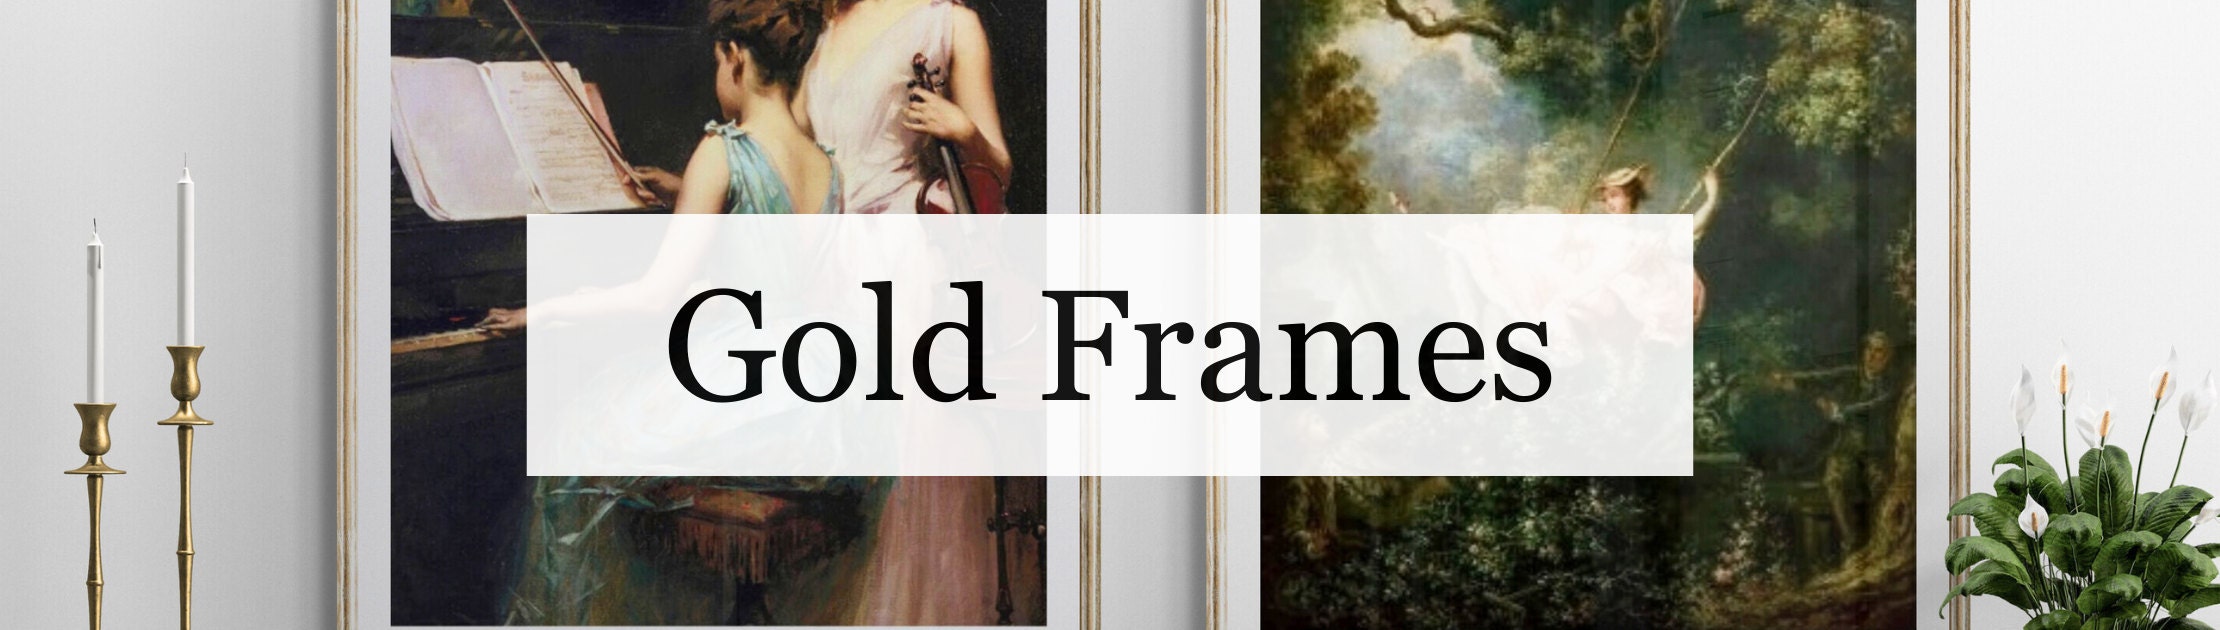 Gold frame ideas for 8x10 art prints